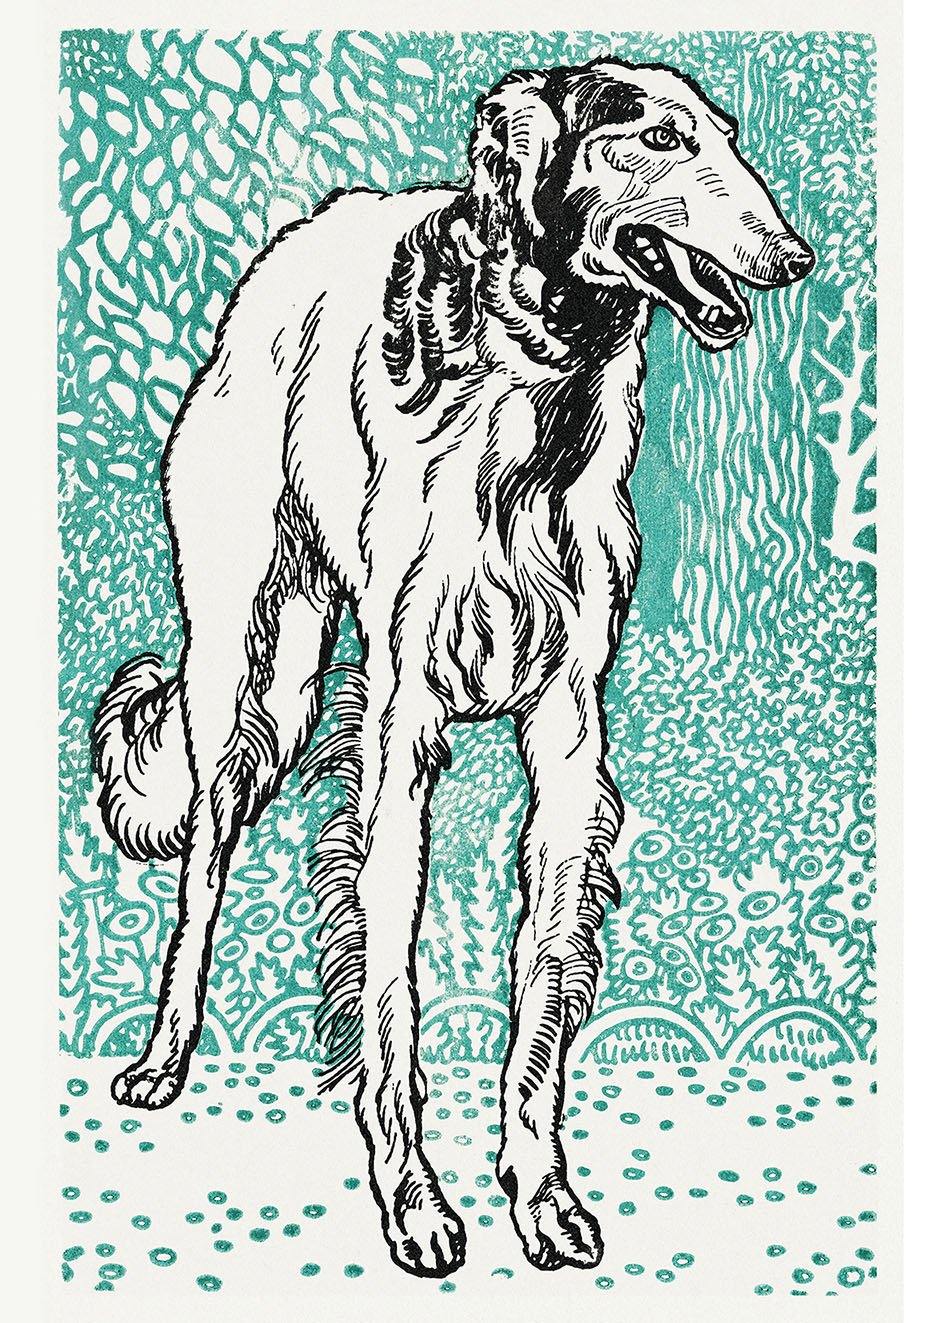 DOG ART PRINTS: Bulldog, Greyhound Artworks by Moriz Jung - Pimlico Prints